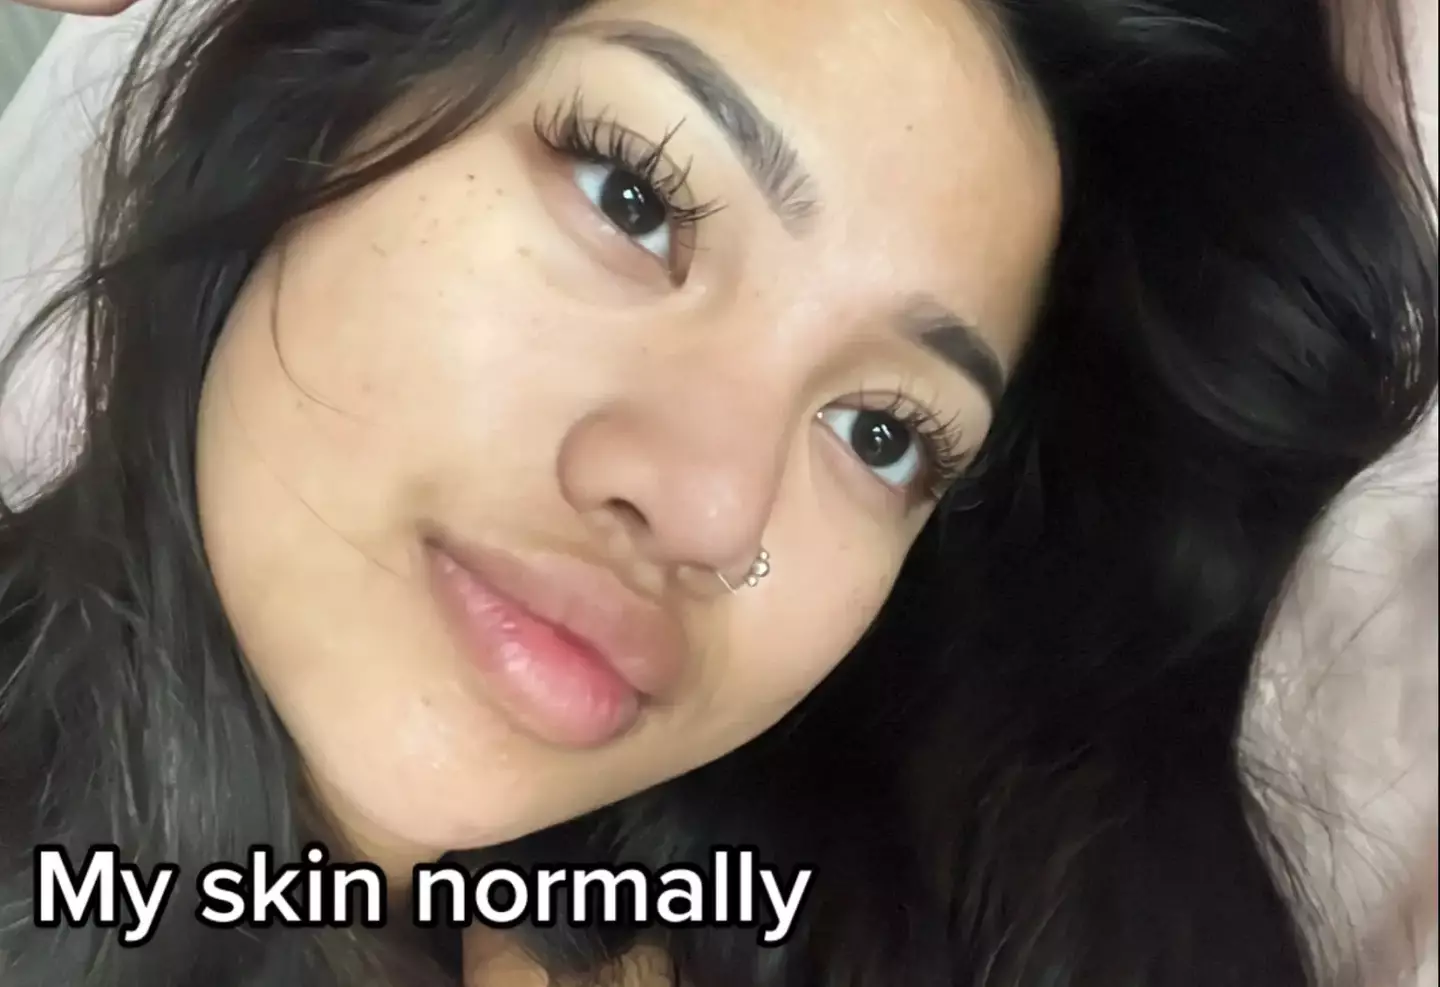 Louaira Dela Cruz's skin before she contracted ringworm.